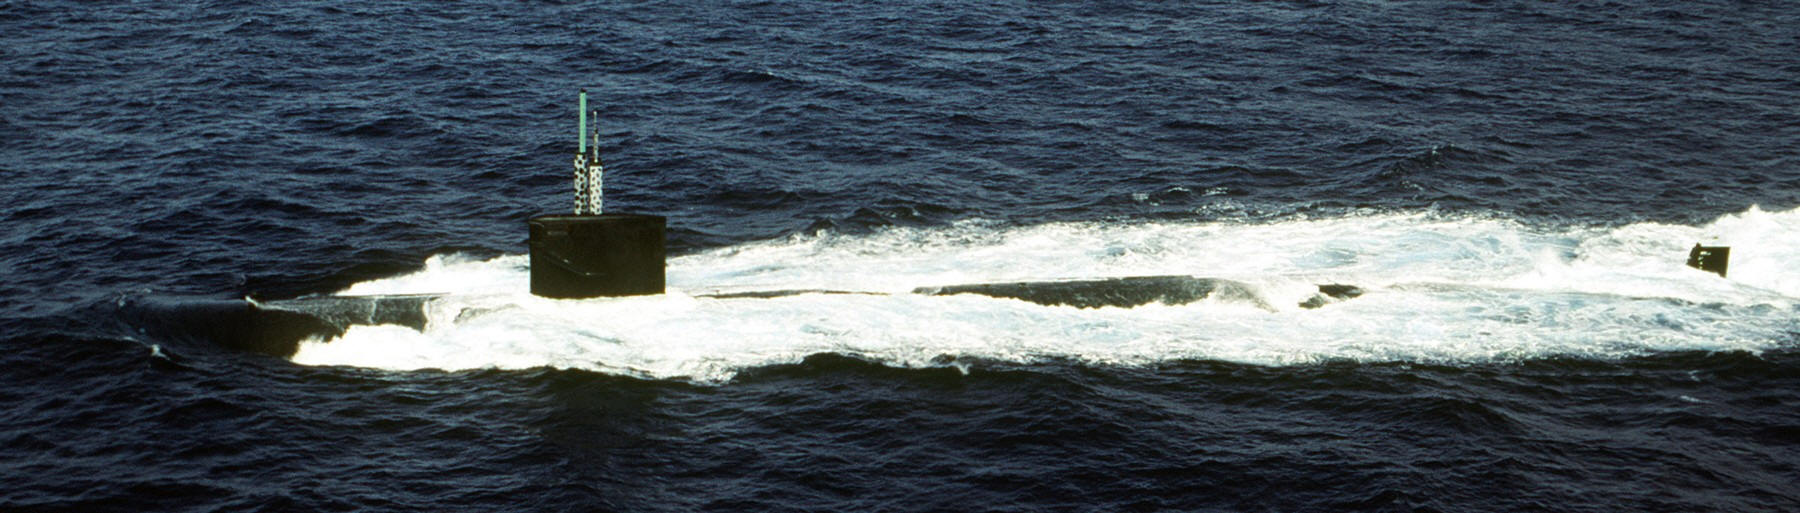 ssn-702 uss phoenix los angeles class attack submarine